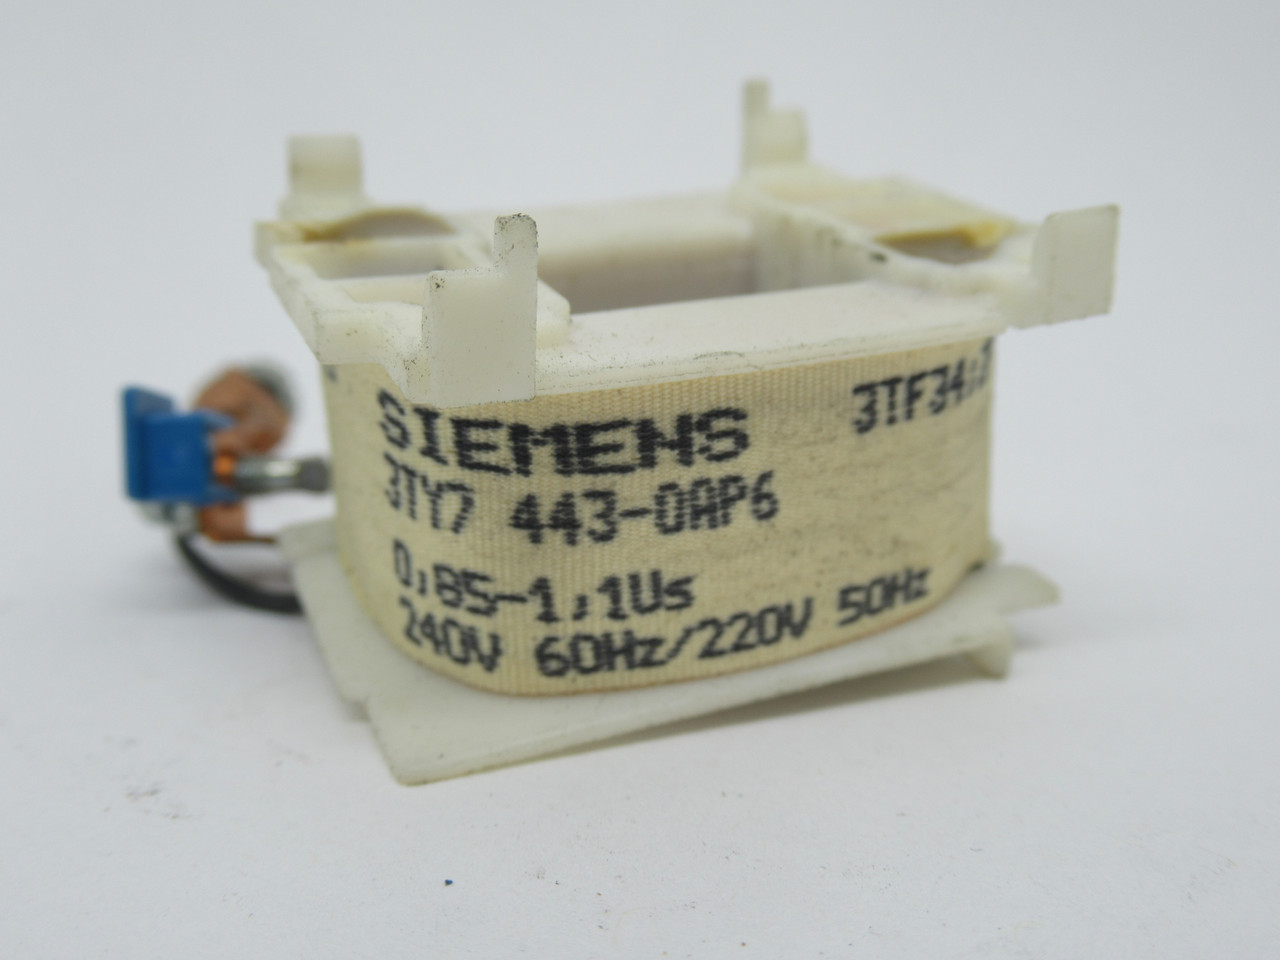 Siemens 3TY7443-0AP6 Magnetic Coil 220/240VAC 50/60Hz SHELF WEAR NOP